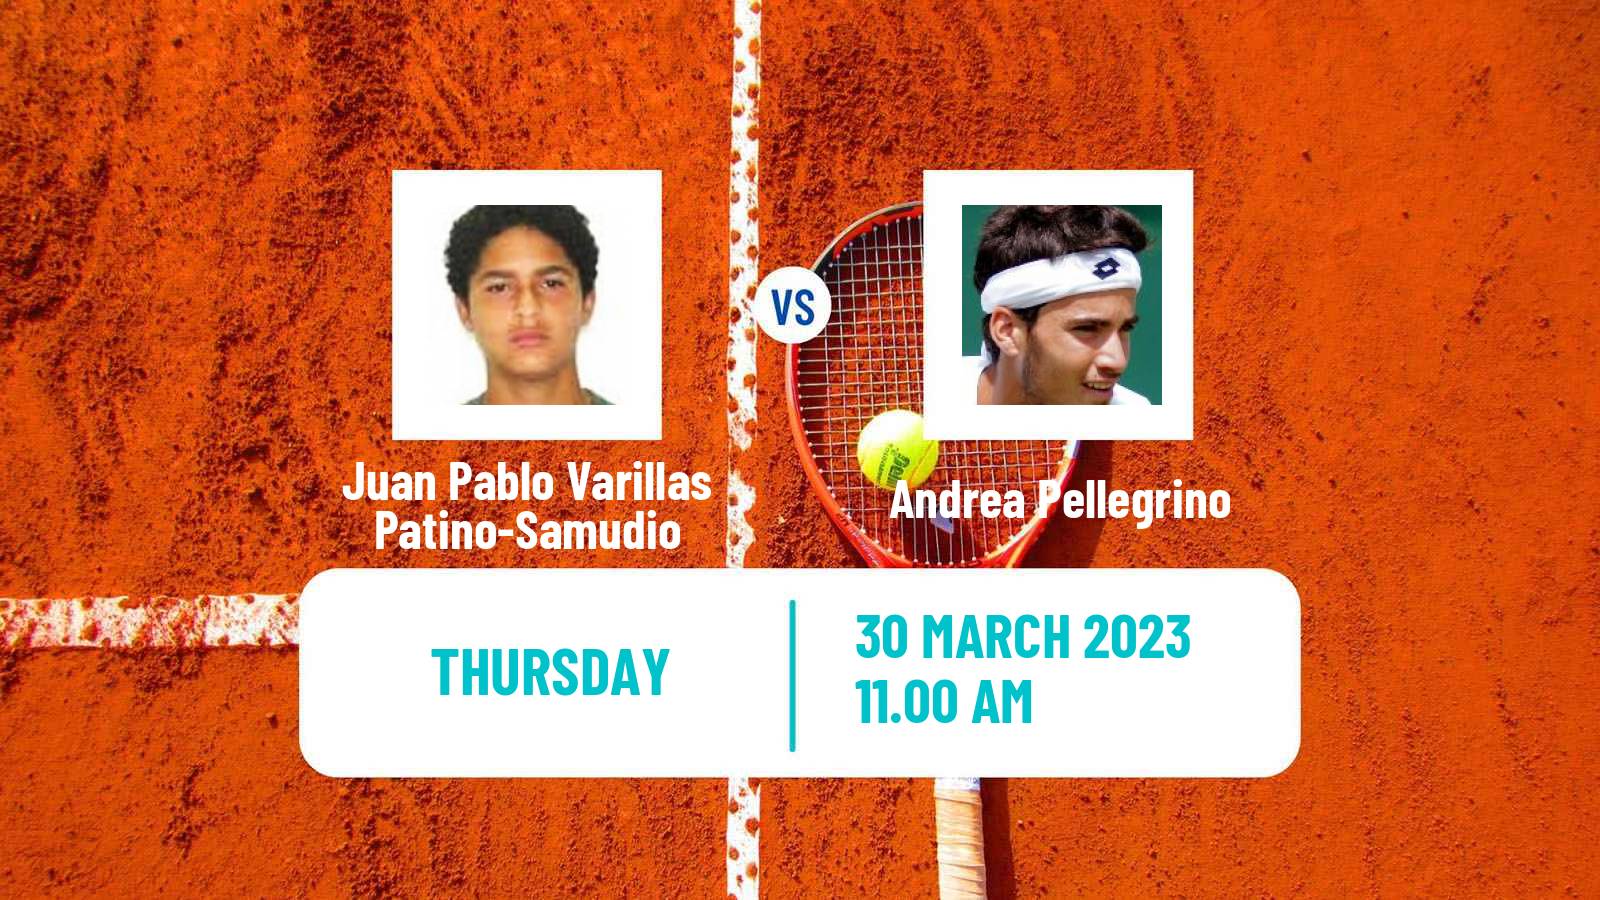 Tennis ATP Challenger Juan Pablo Varillas Patino-Samudio - Andrea Pellegrino